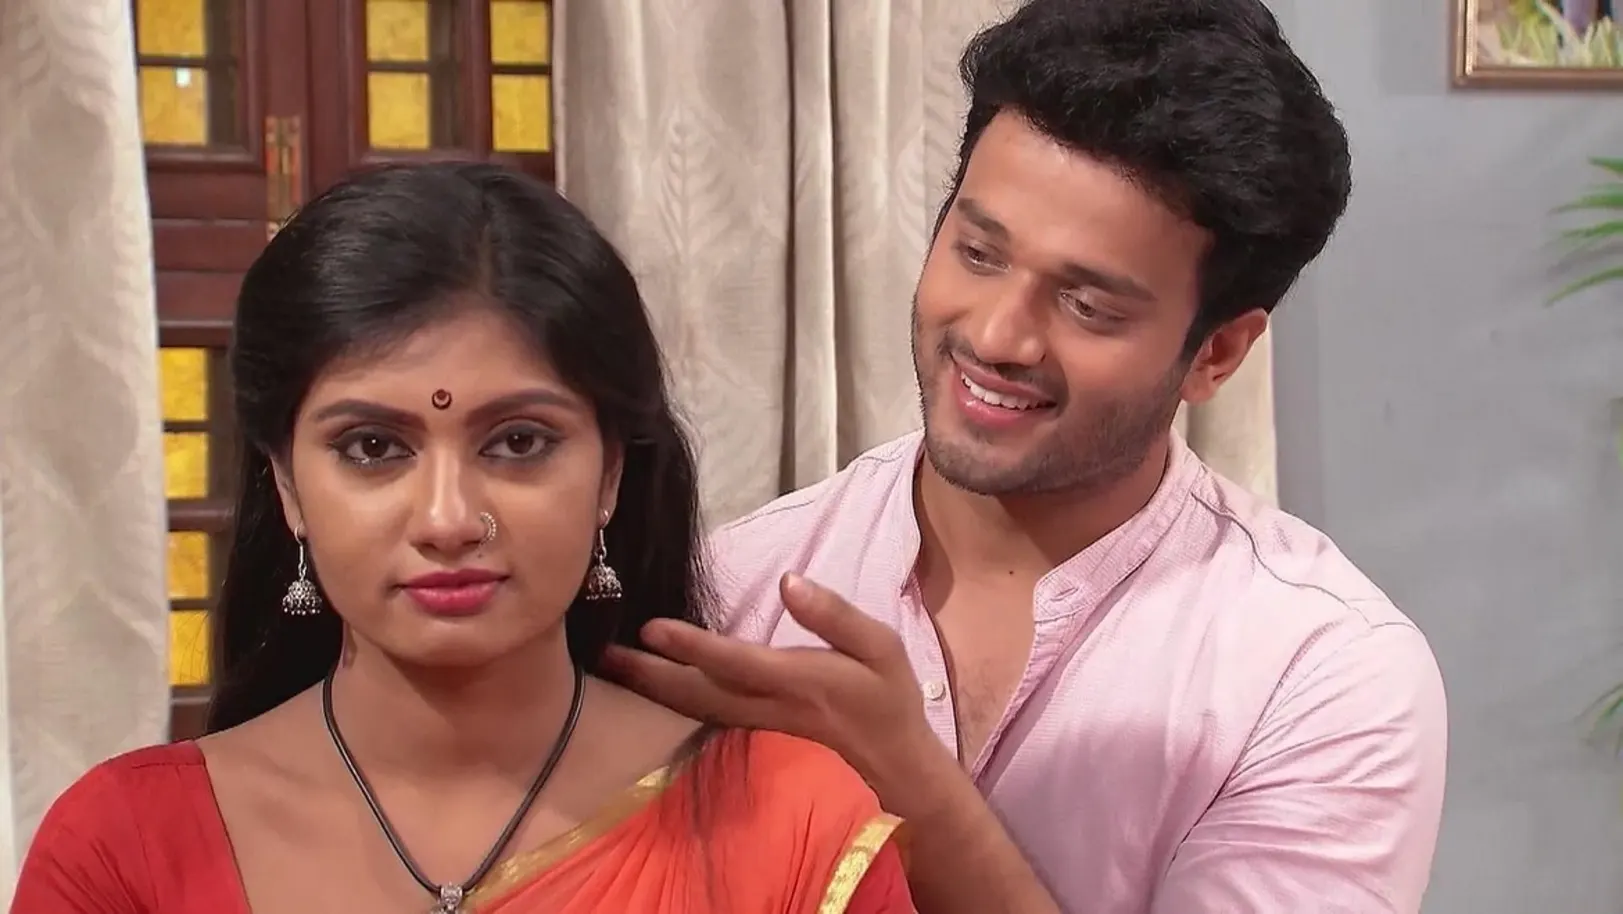 Punya Is Shocked as Anirudha Combs Her Hair | Naagamandala 